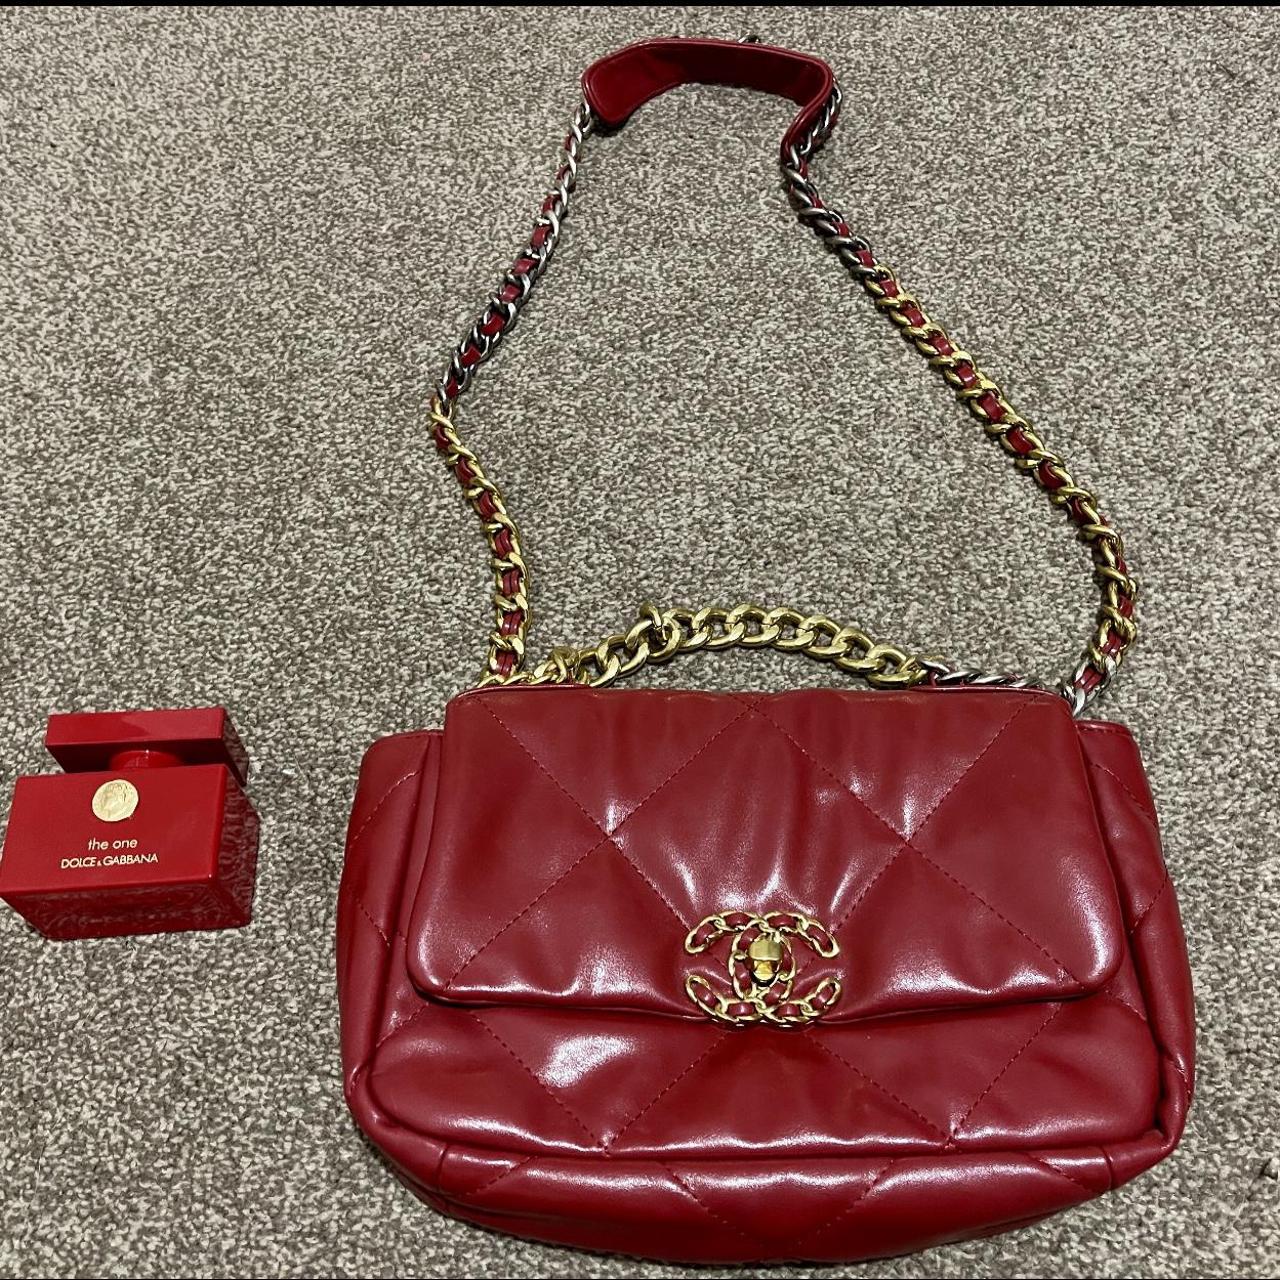 Product Image 1 - Chanel handbag wine red colour